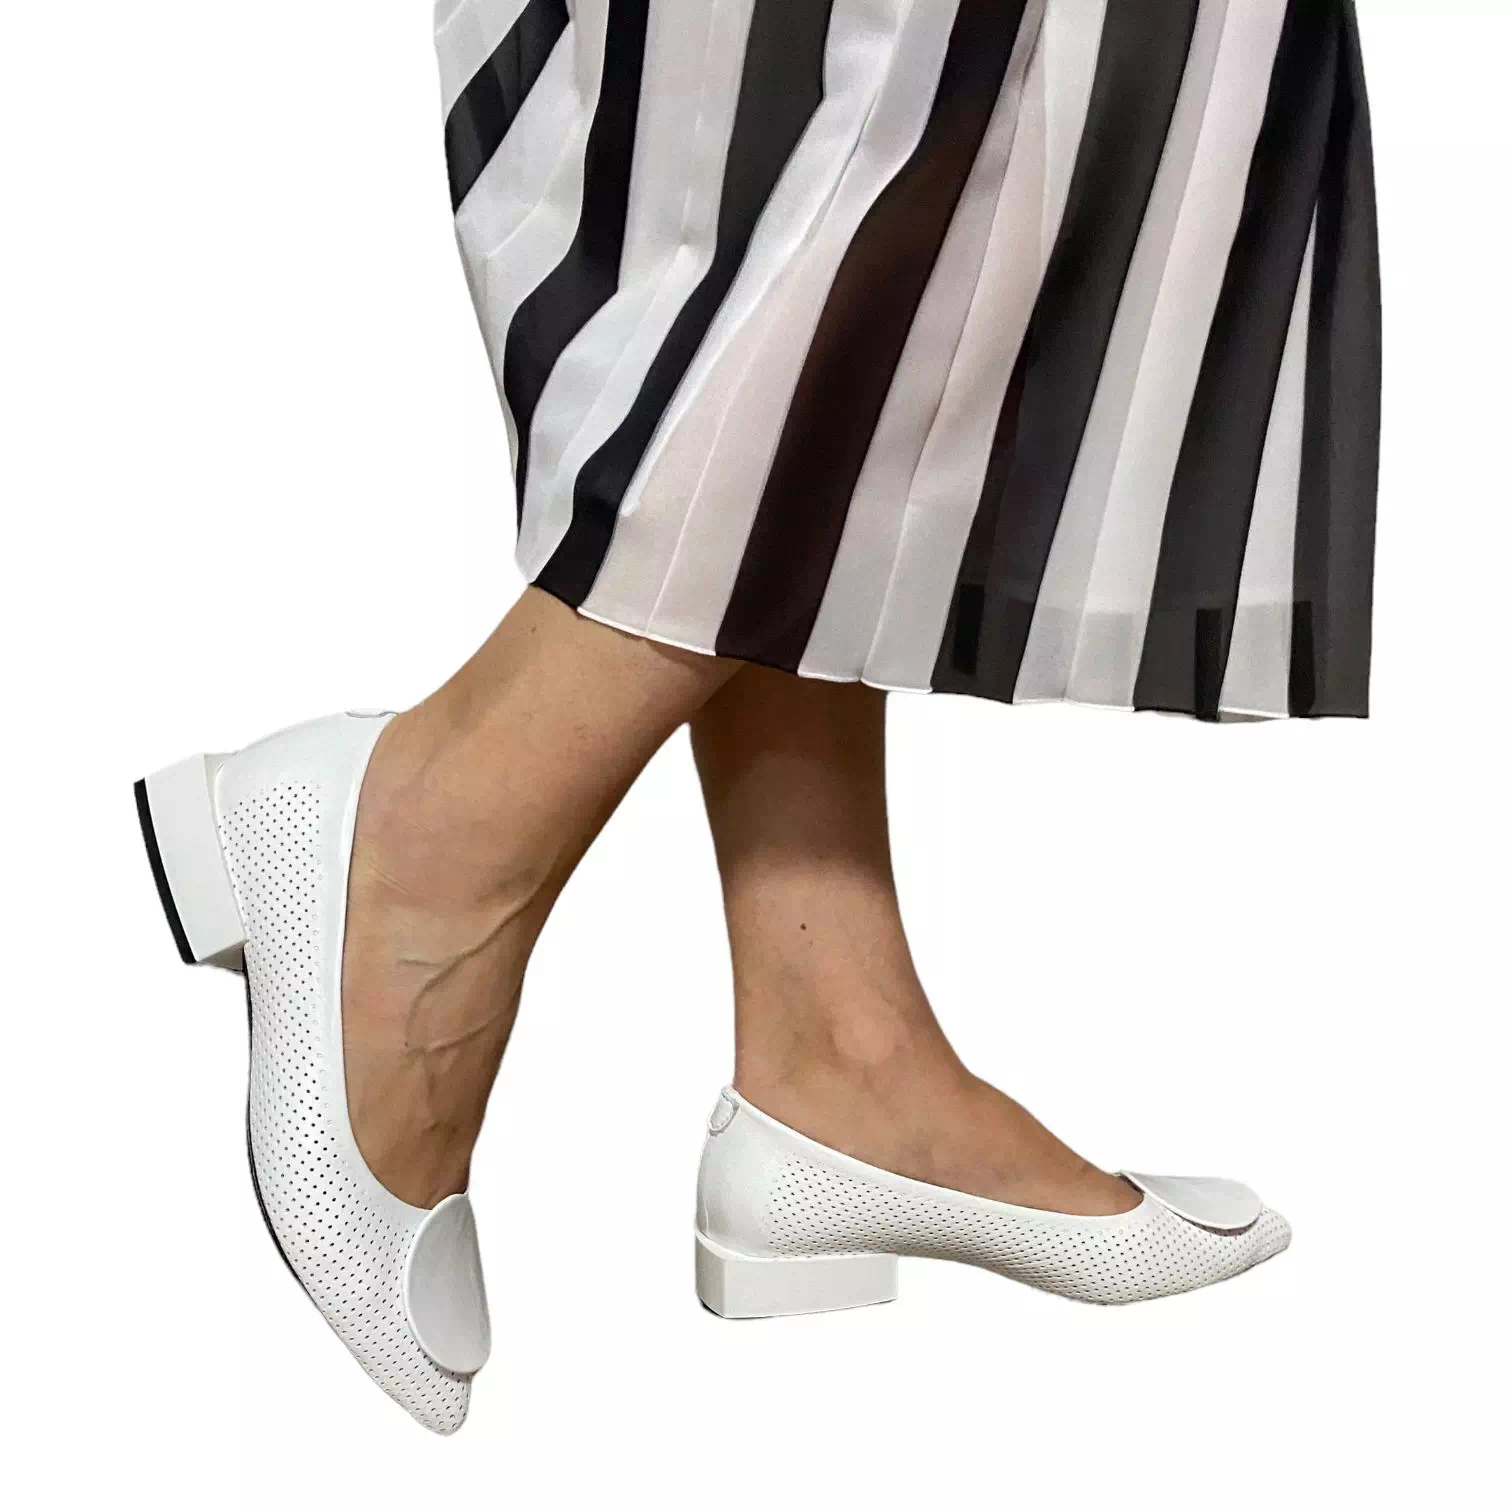 Pantofi Raxela albi cu perforatii si accesoriu